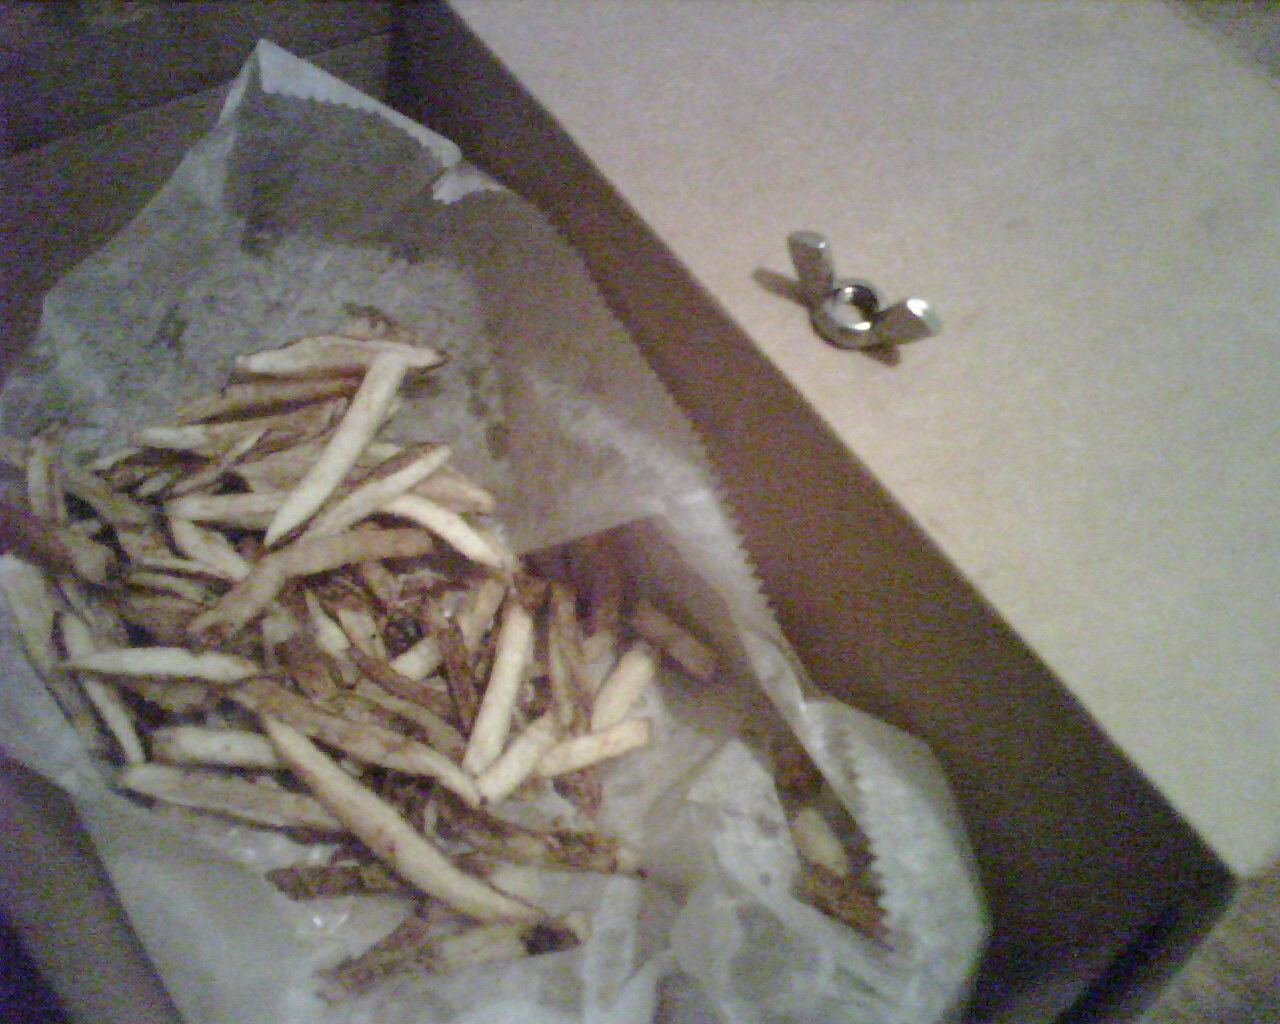 [2008-06-28-BL-wingnut-fries-1.jpg]